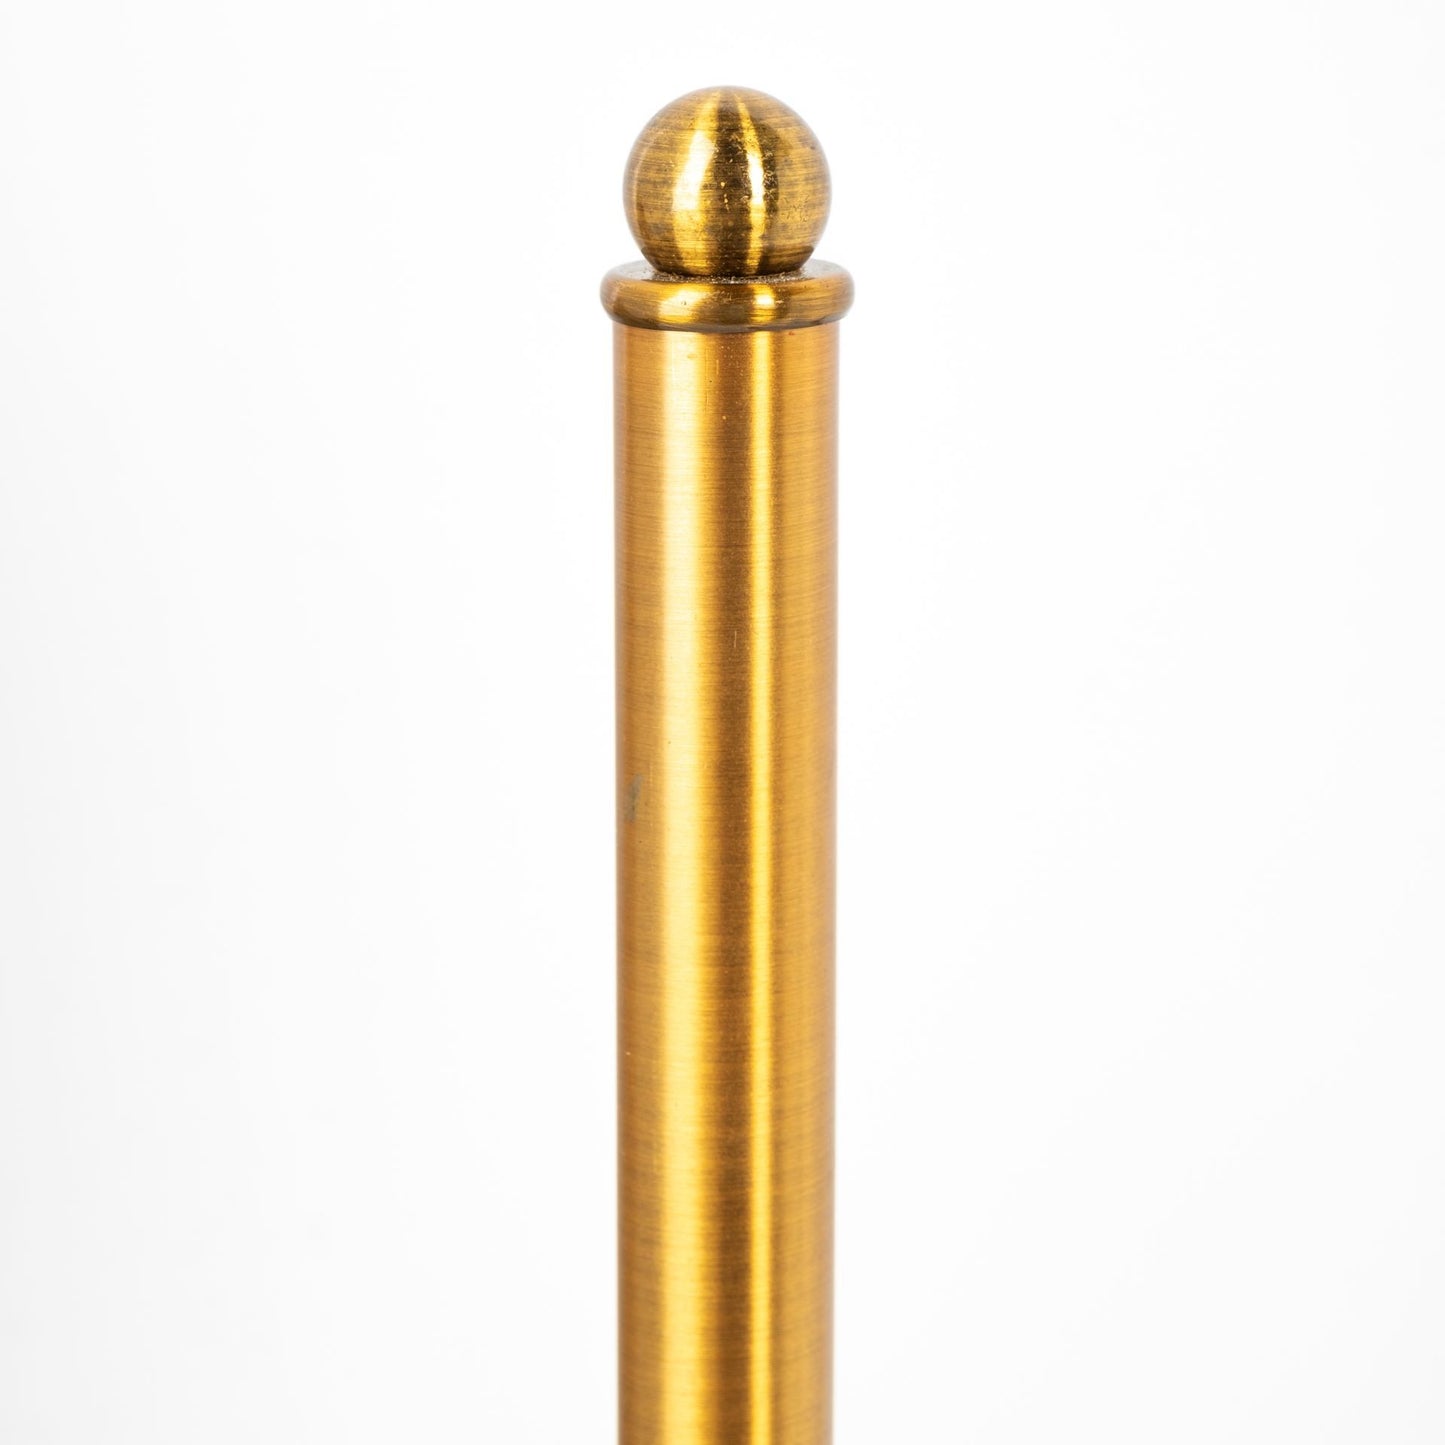 Sleek Golden Cone Adjustable Table Or Desk Lamp